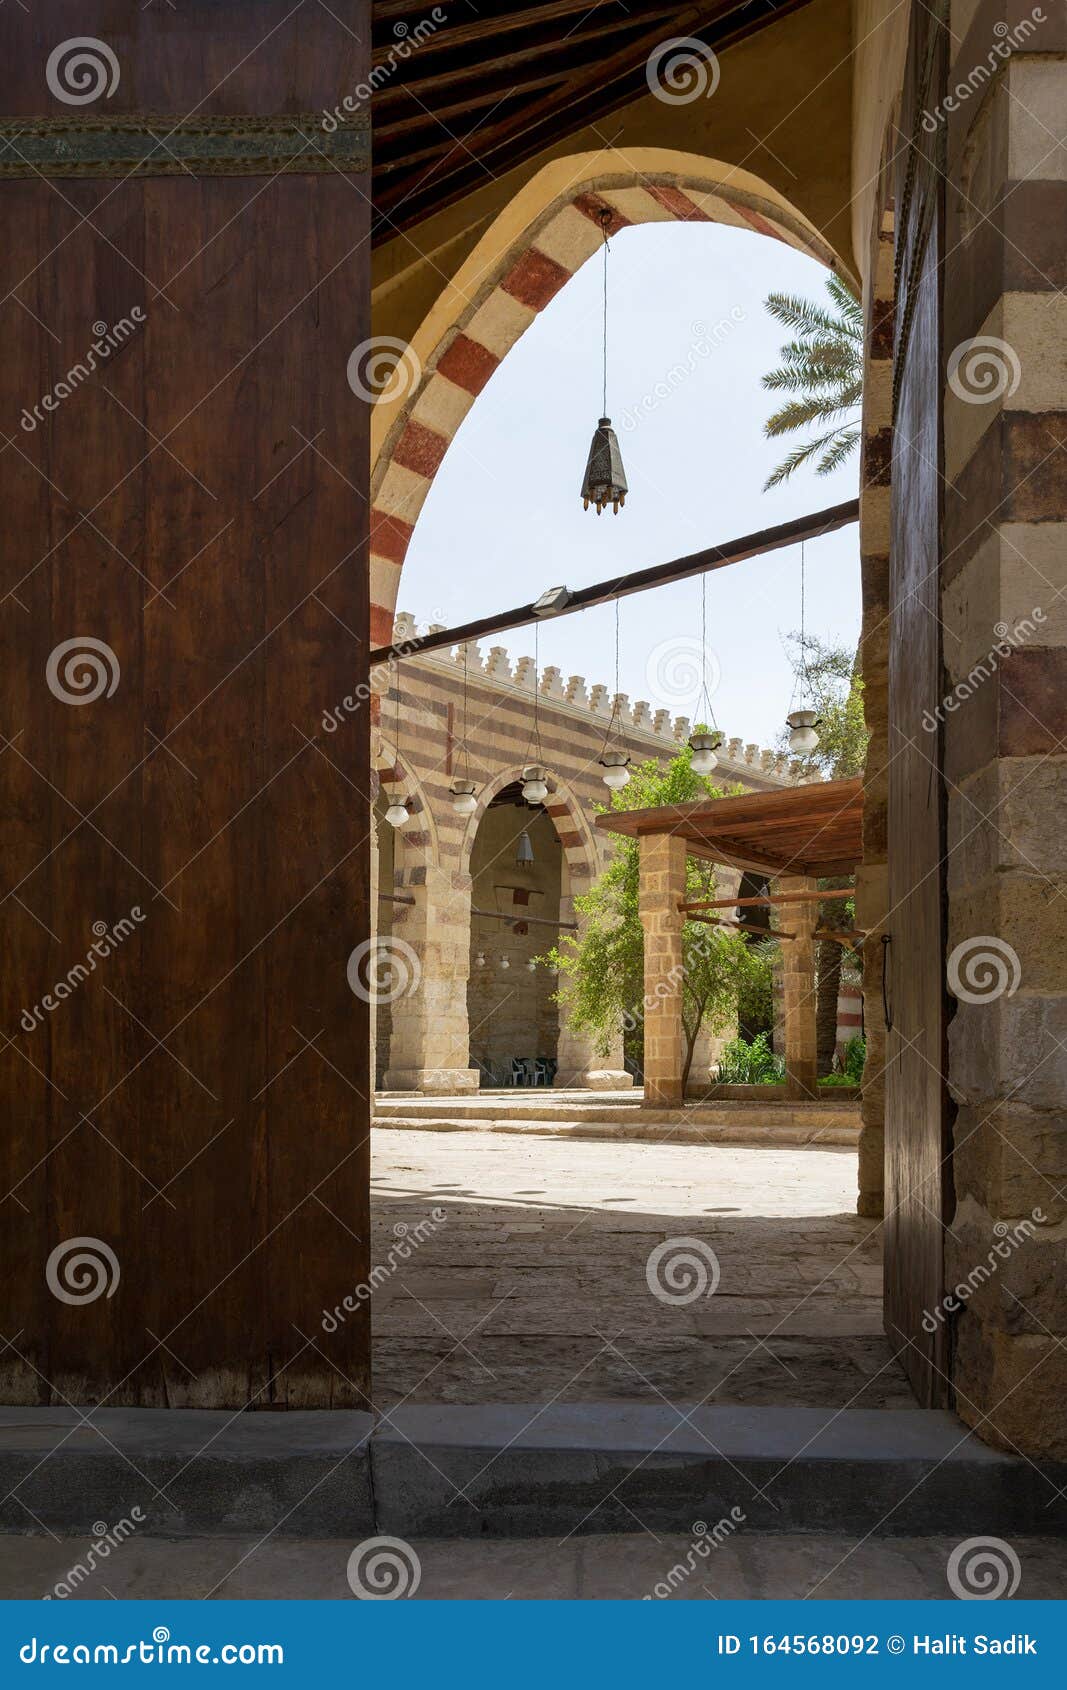 door of historic mamluk era amir aqsunqur mosque, blue mosque, reveling courtyard, cairo, egypt